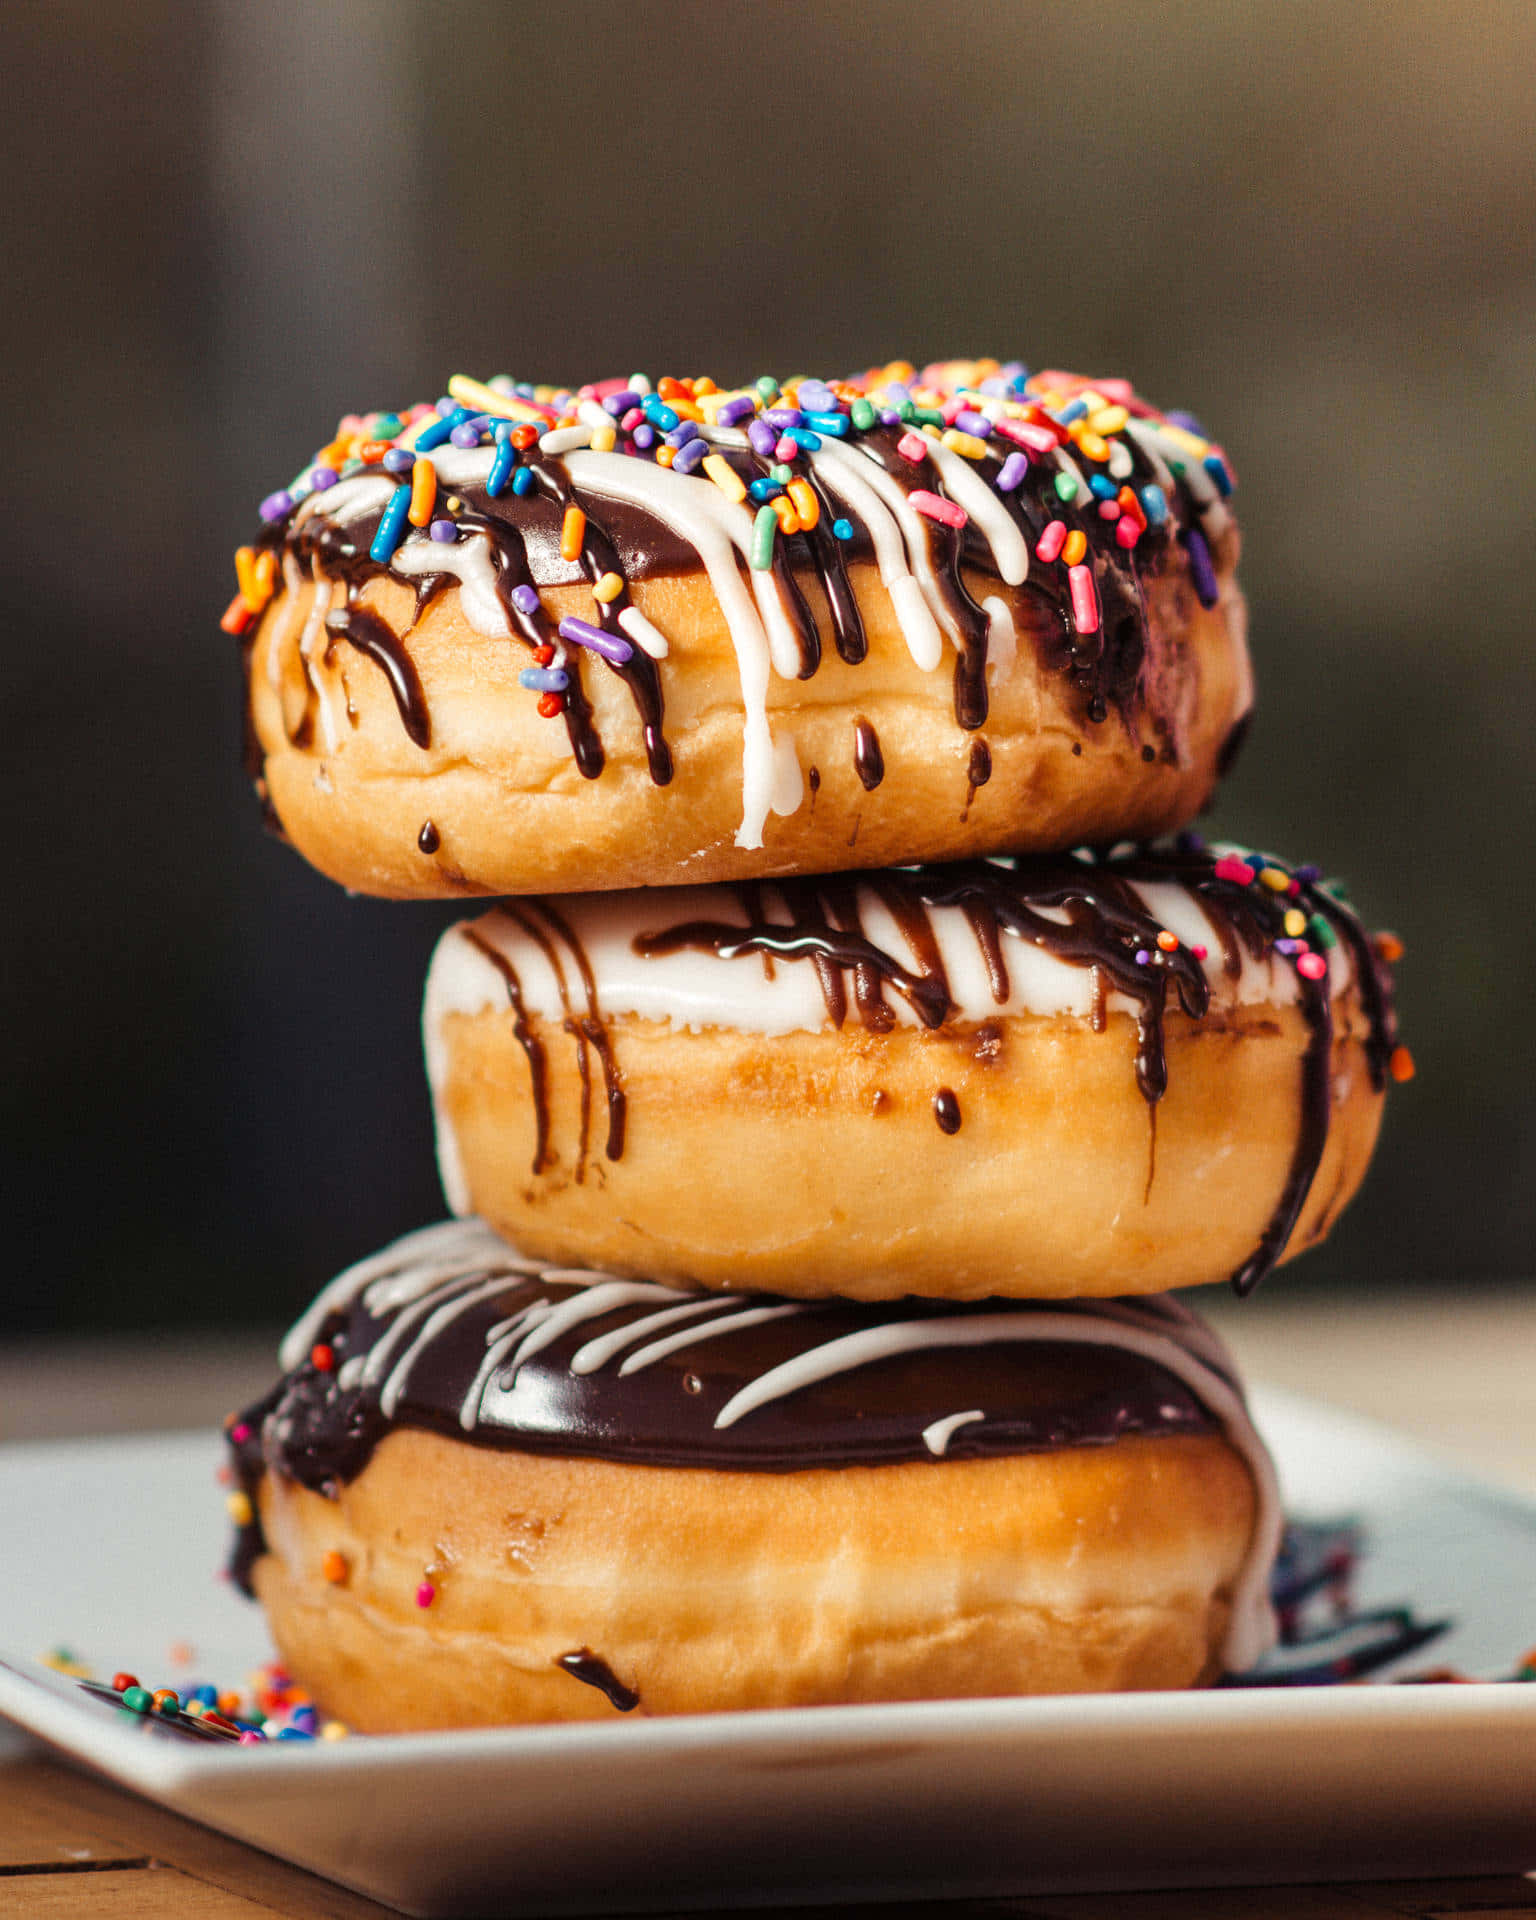 Captivating Display Of Glazed Donuts